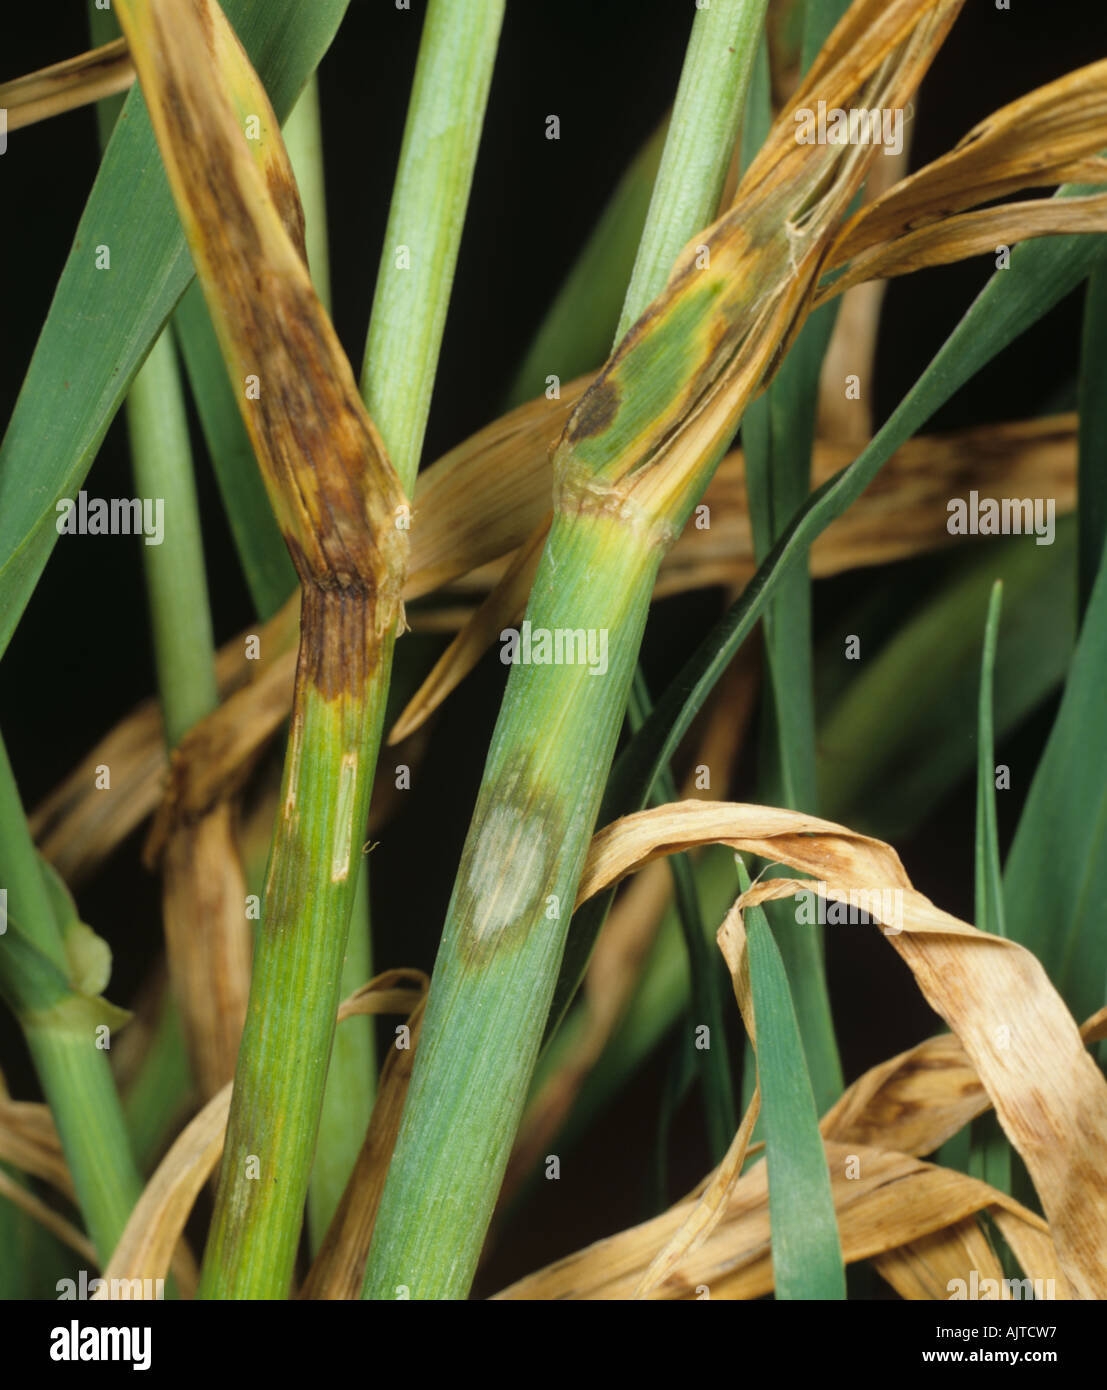 Old early lesions of barley leaf blotch Rhynchosporium secalis on barley leaves and sheath Stock Photo